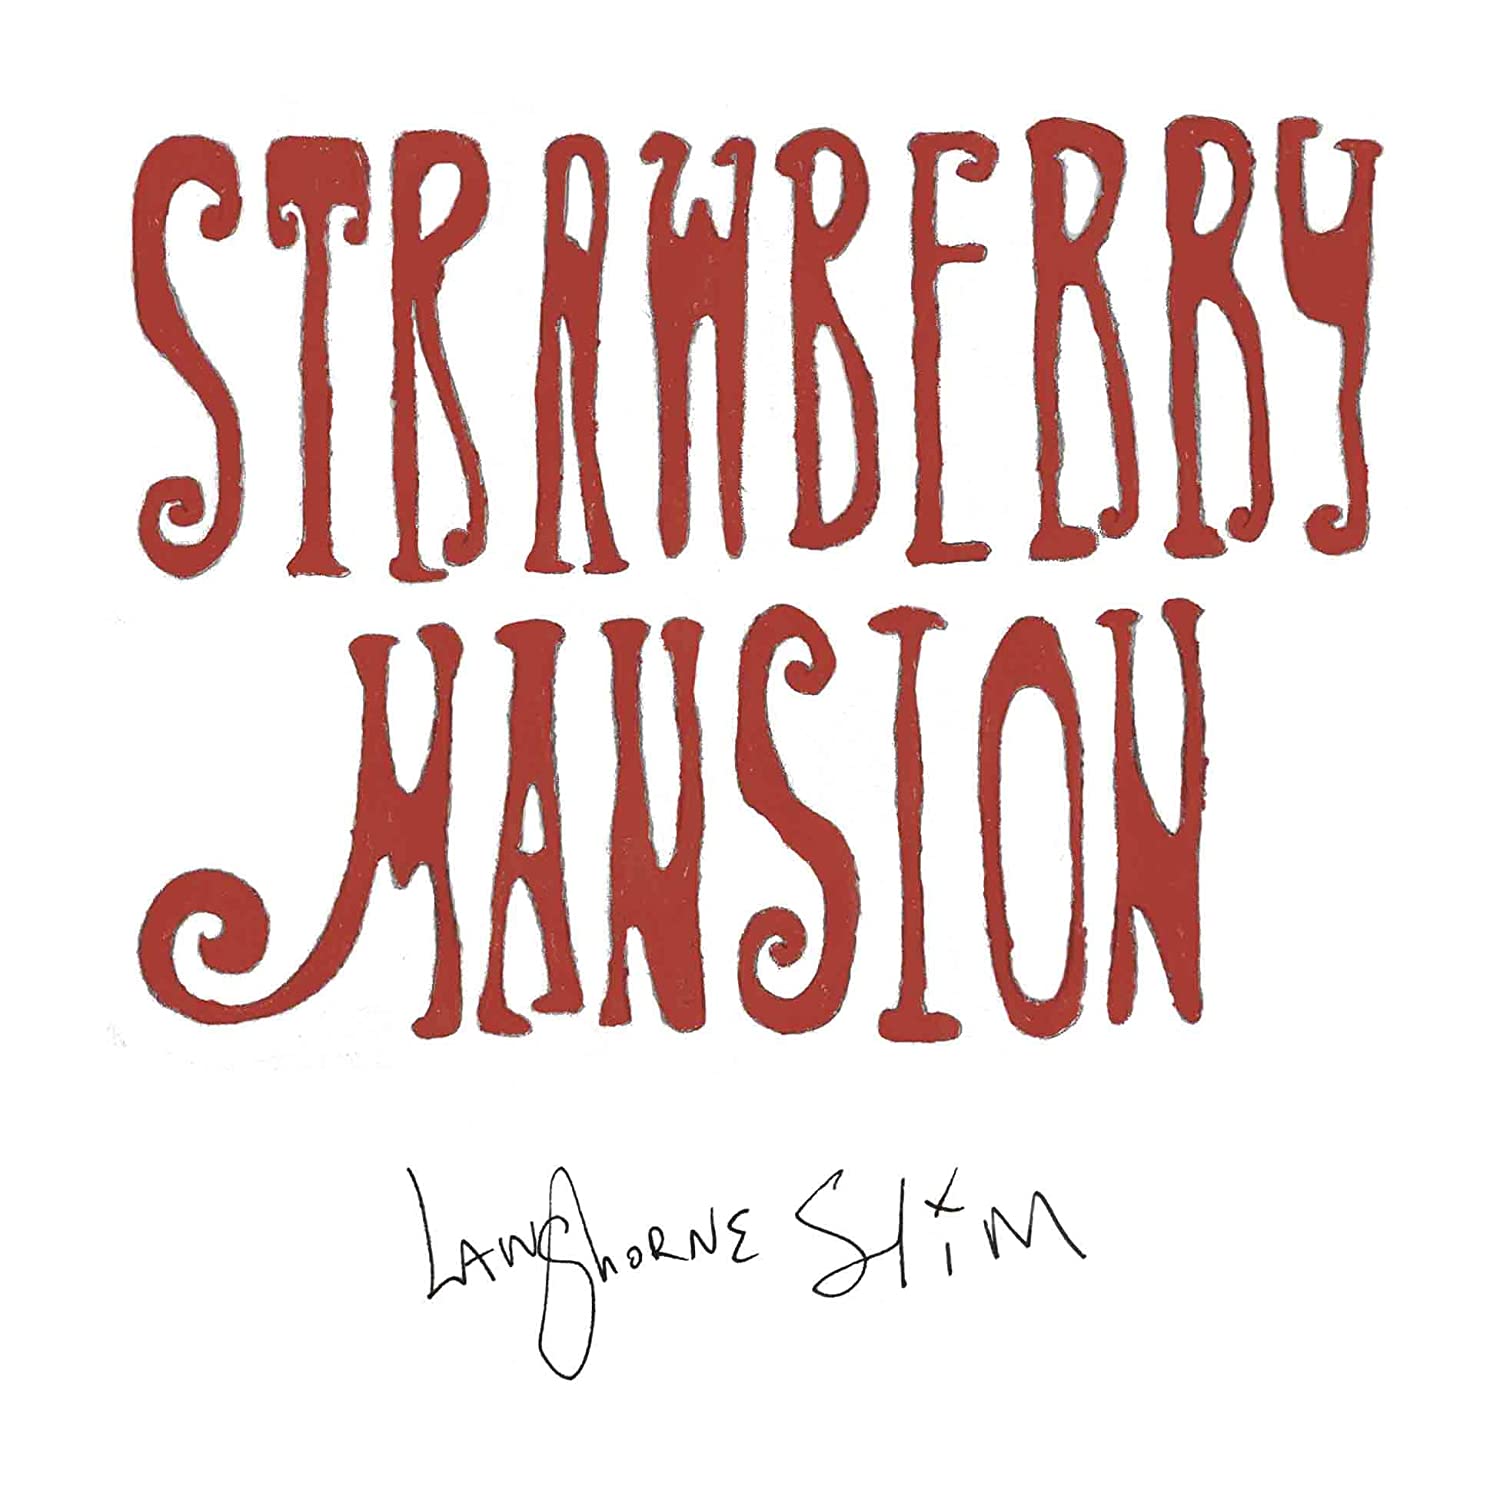 Buy Langhorne Slim – Strawberry Mansion New or Used via Amazon